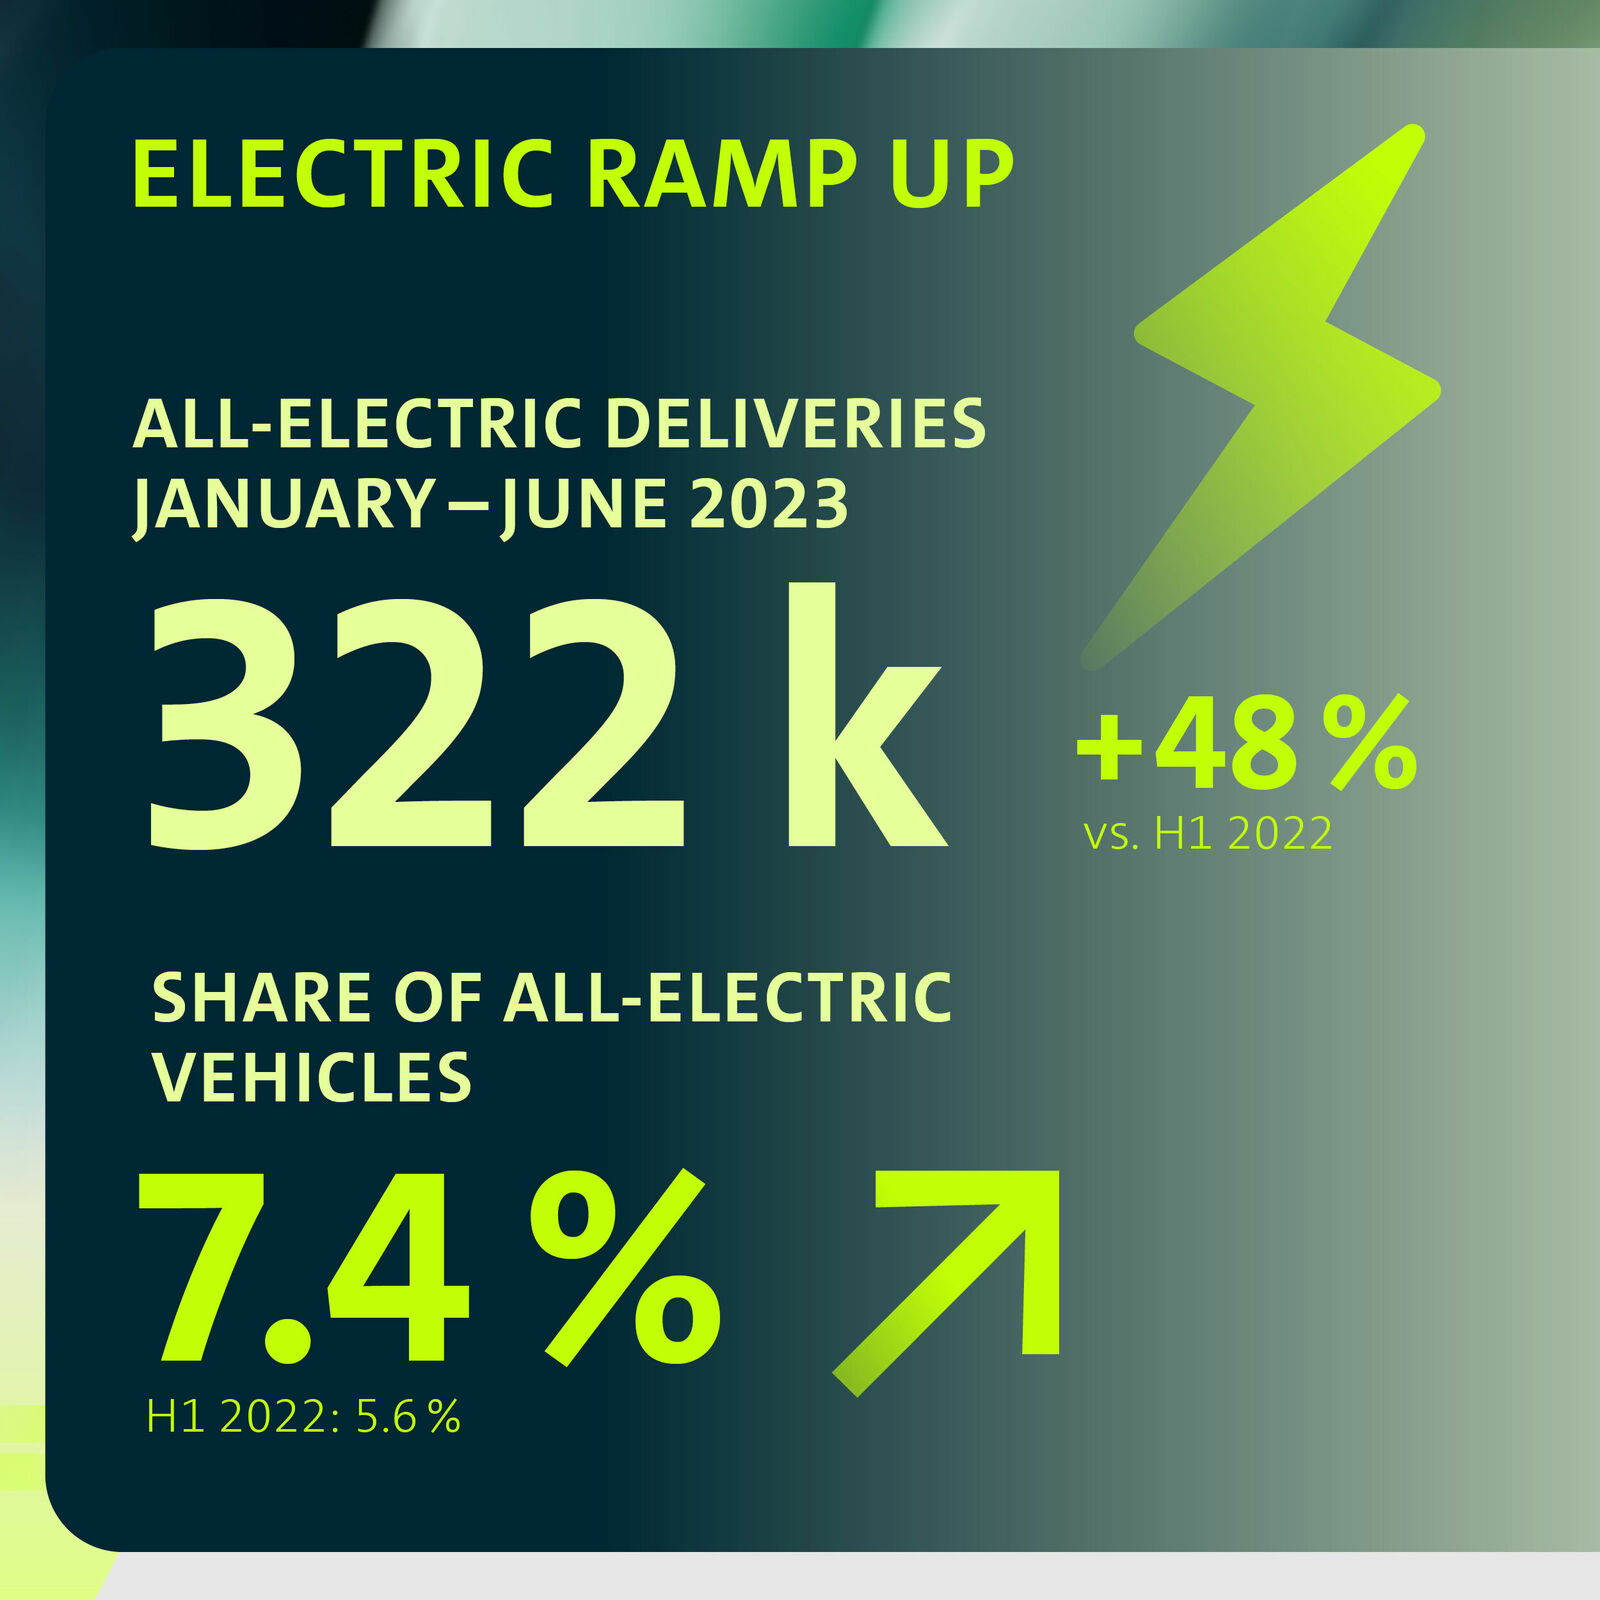 Electric Ramp Up